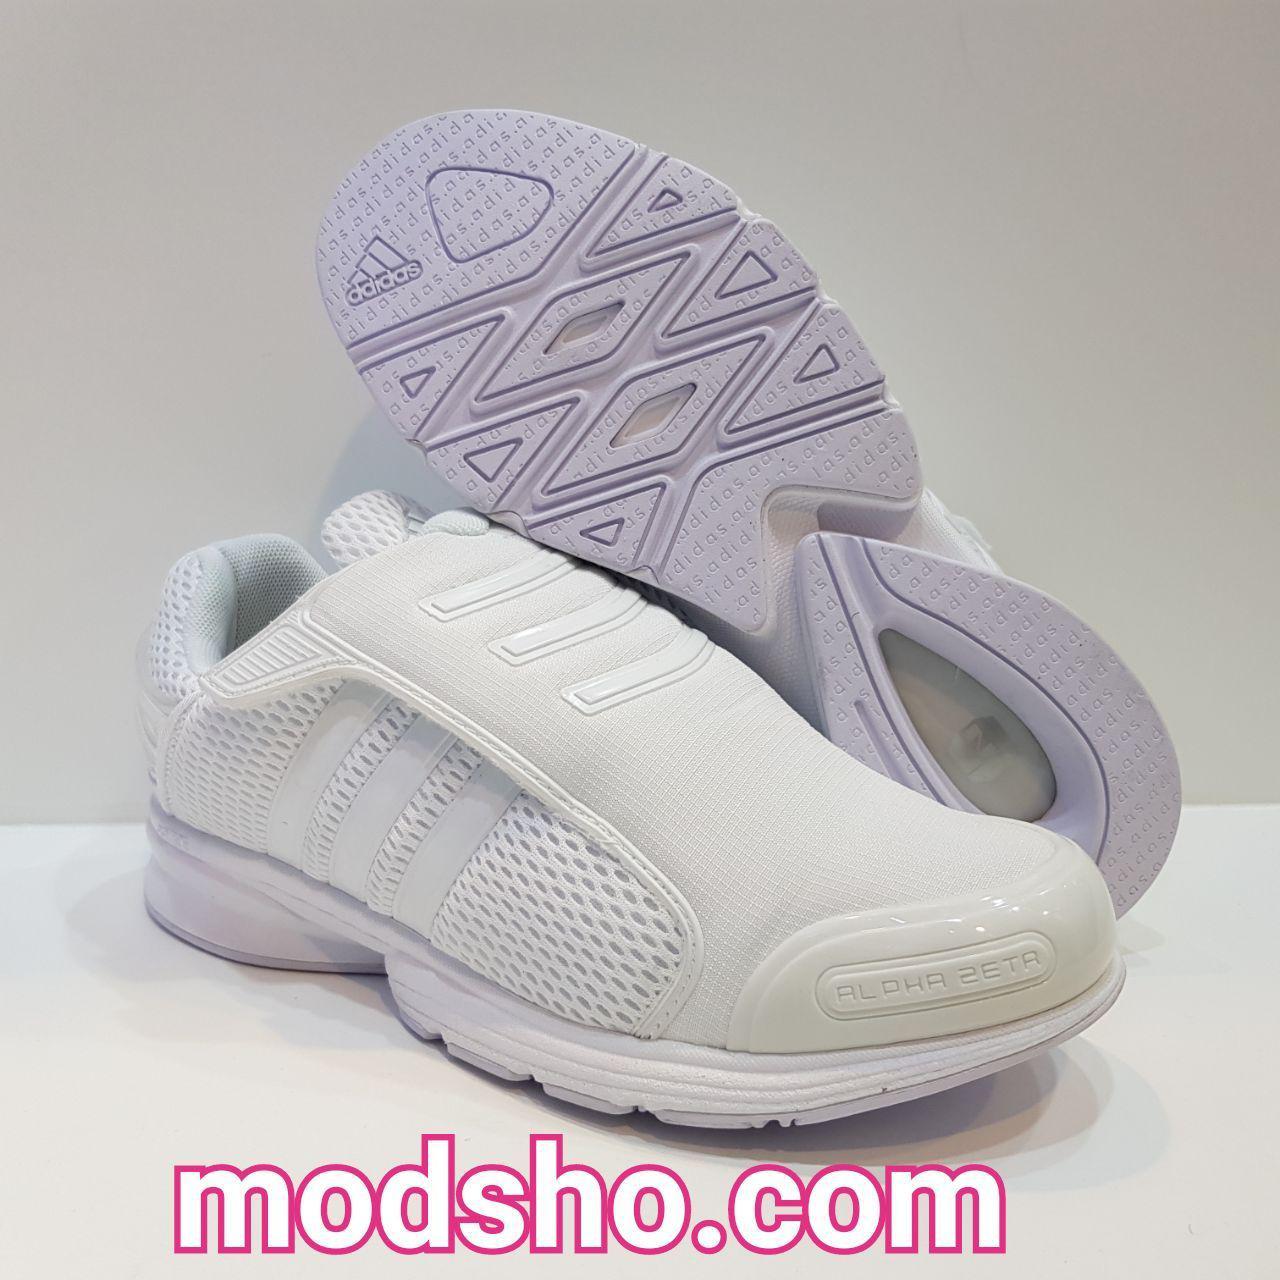 Modsho - فروشگاه اینترنتی Twitter: "#adidas Made in Vietnam Size and Price : https://t.co/kiD4ja9shY https://t.co/8FuUYqt3ZA" / Twitter